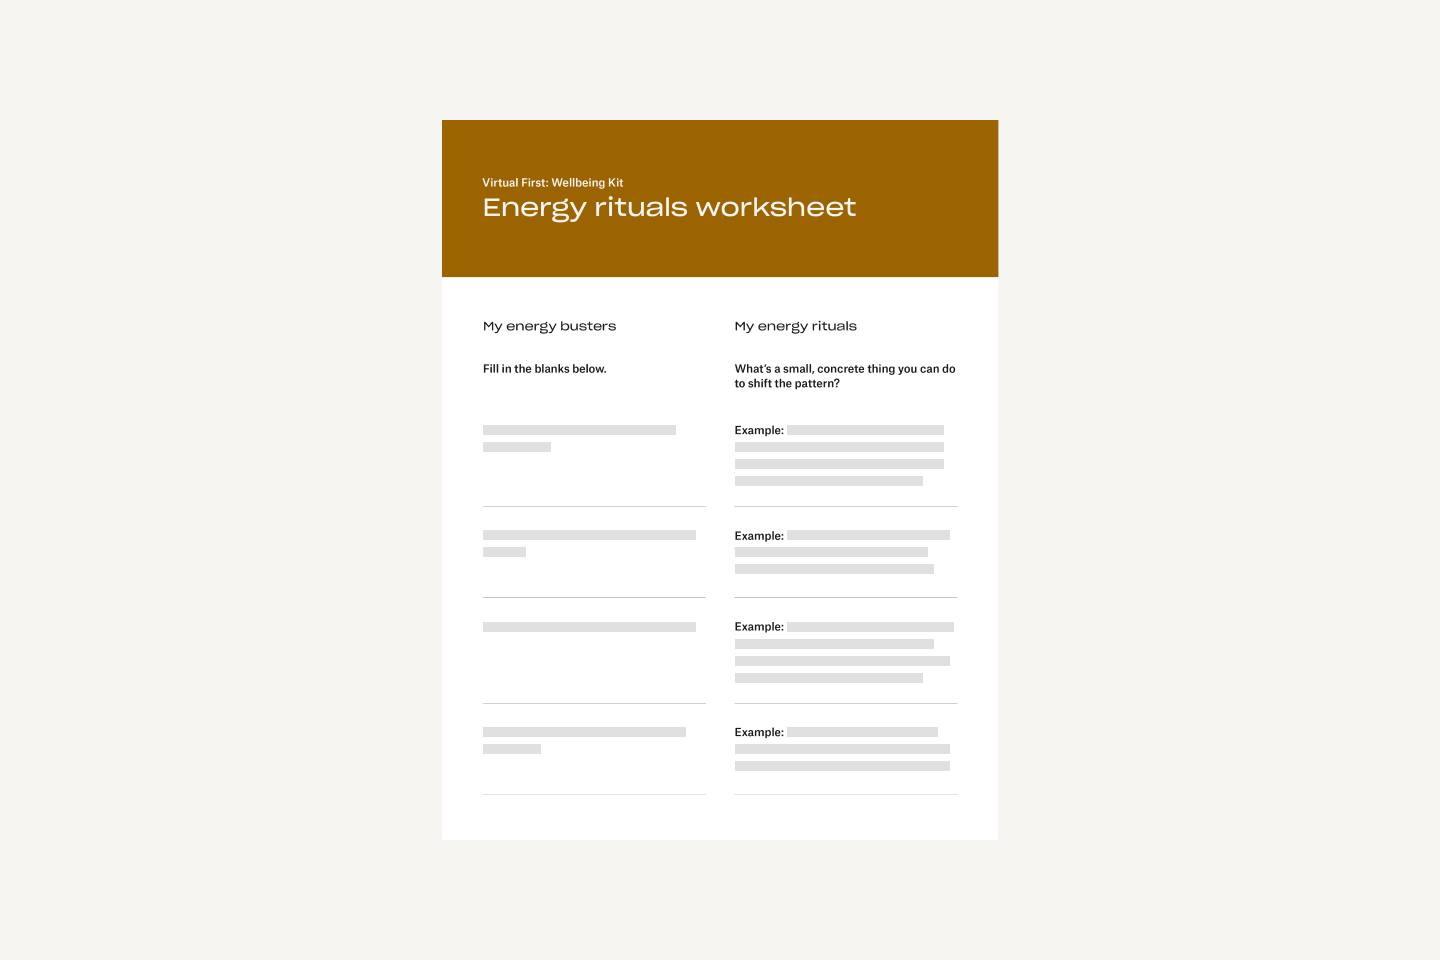 Energy rituals worksheet